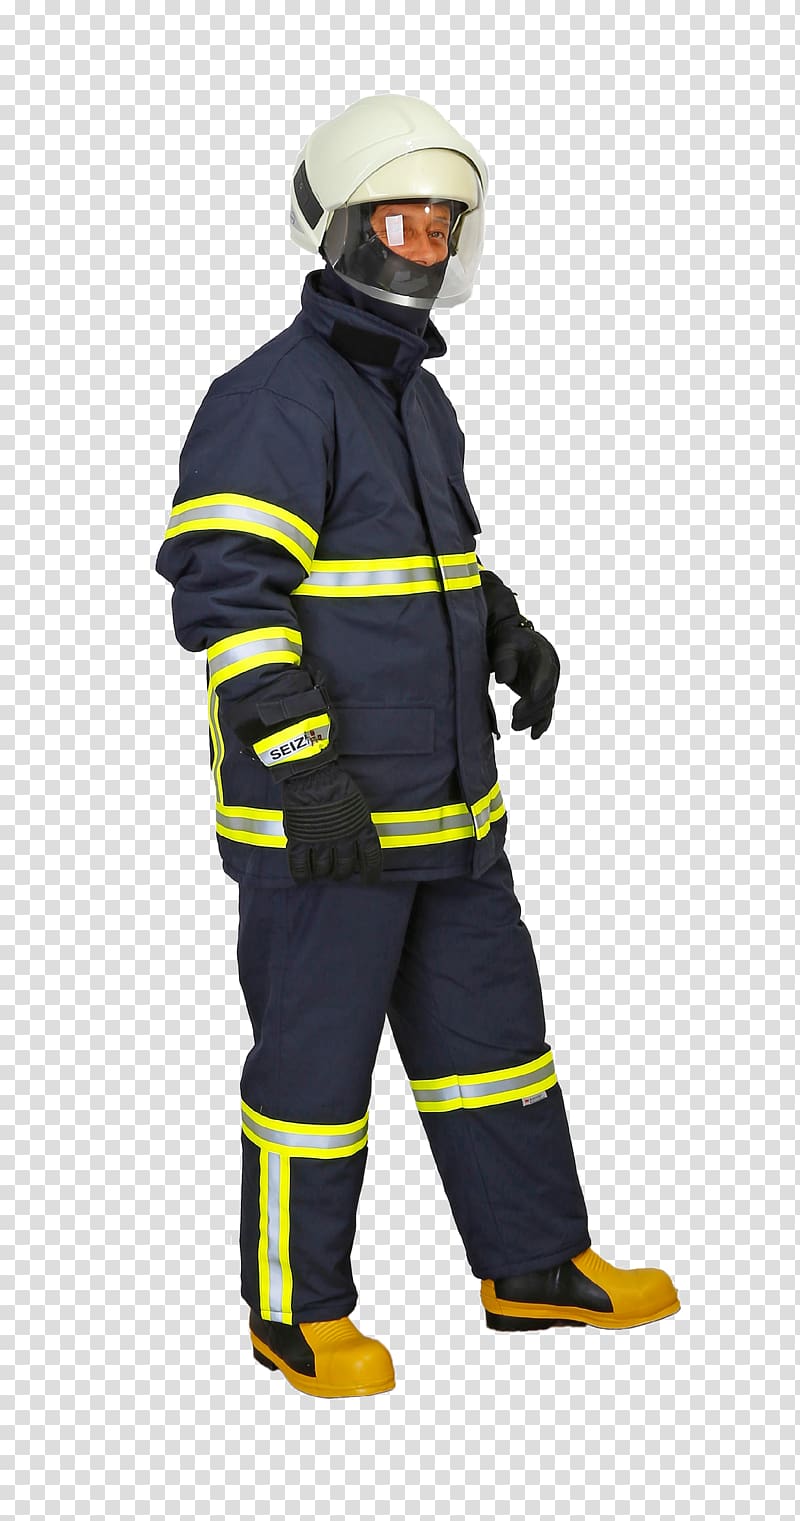 Firefighter Uniform Sapper Soldier Firefighting, firefighter transparent background PNG clipart